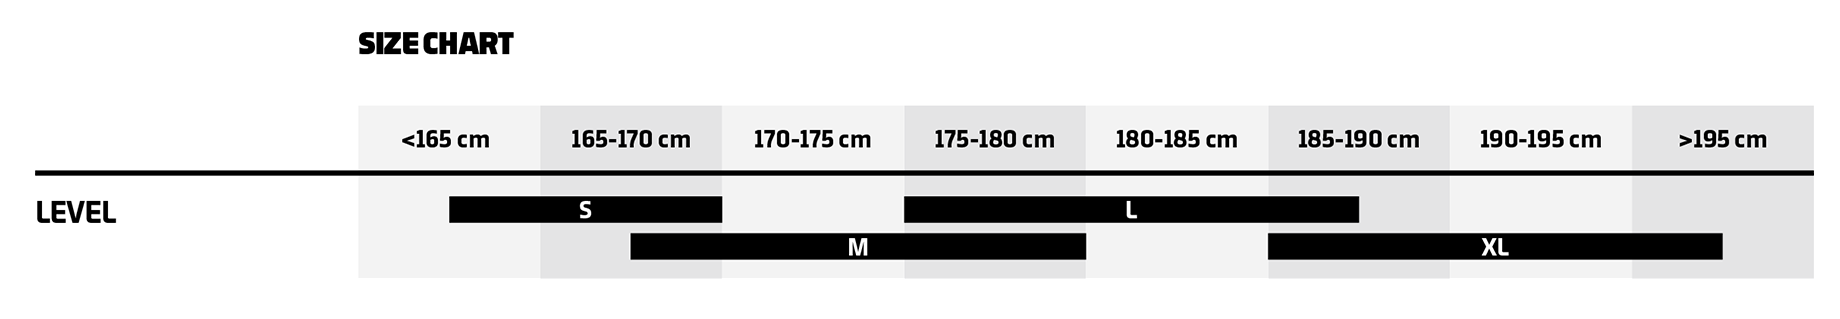 Mondraker 2023 Level Size Guide